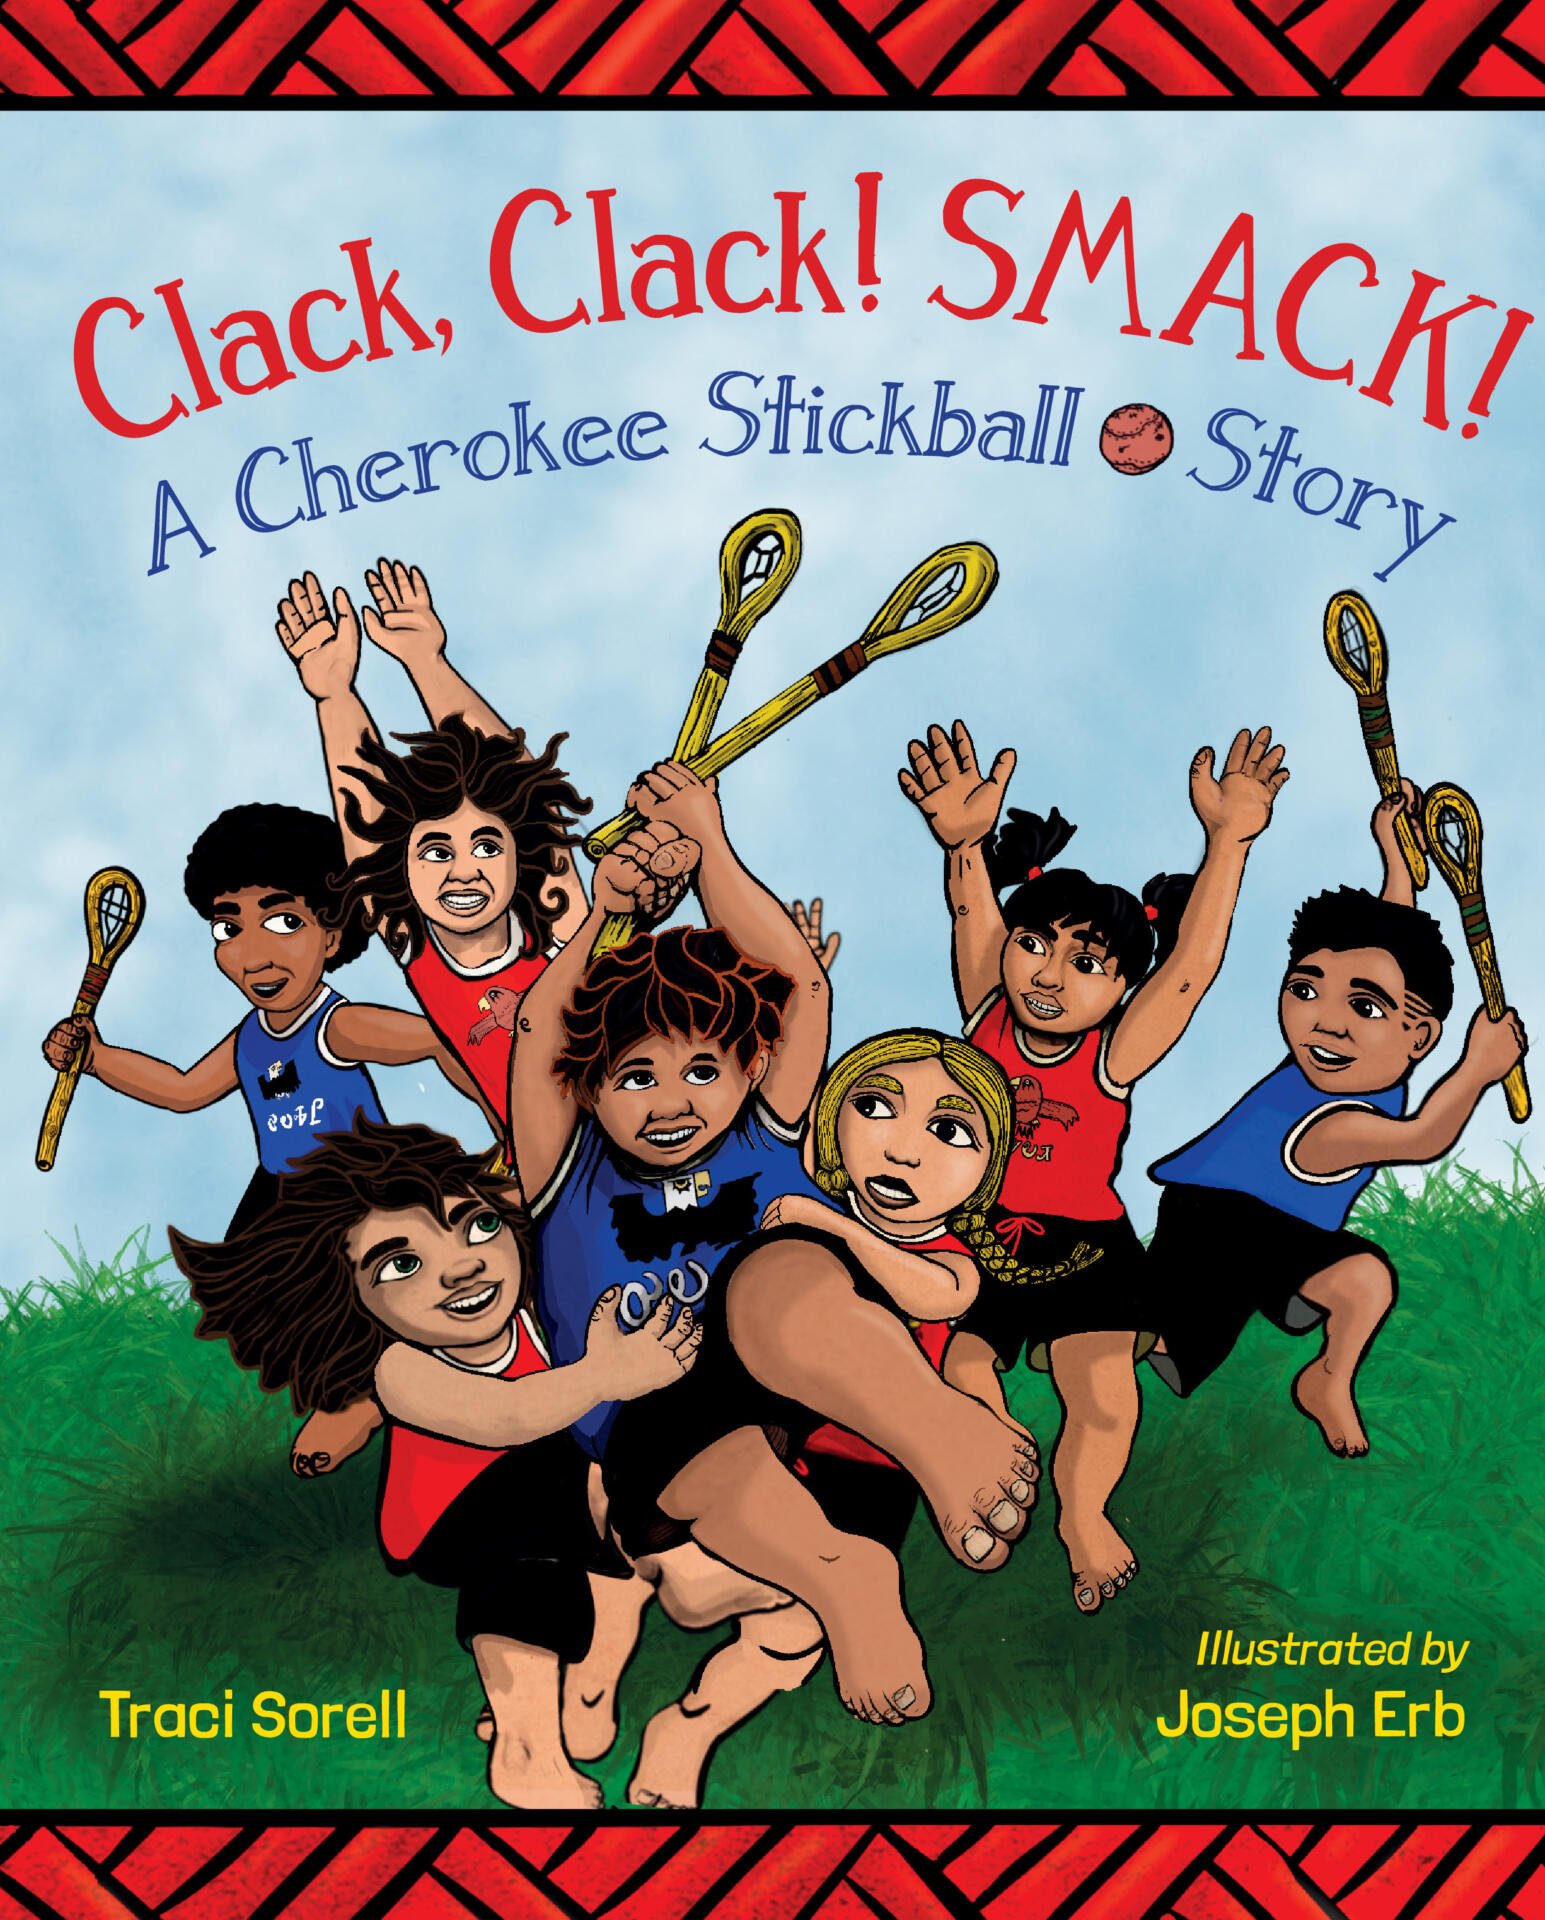 Book Cover of Clack, Clack! Smack! A Cherokee Stickball Story